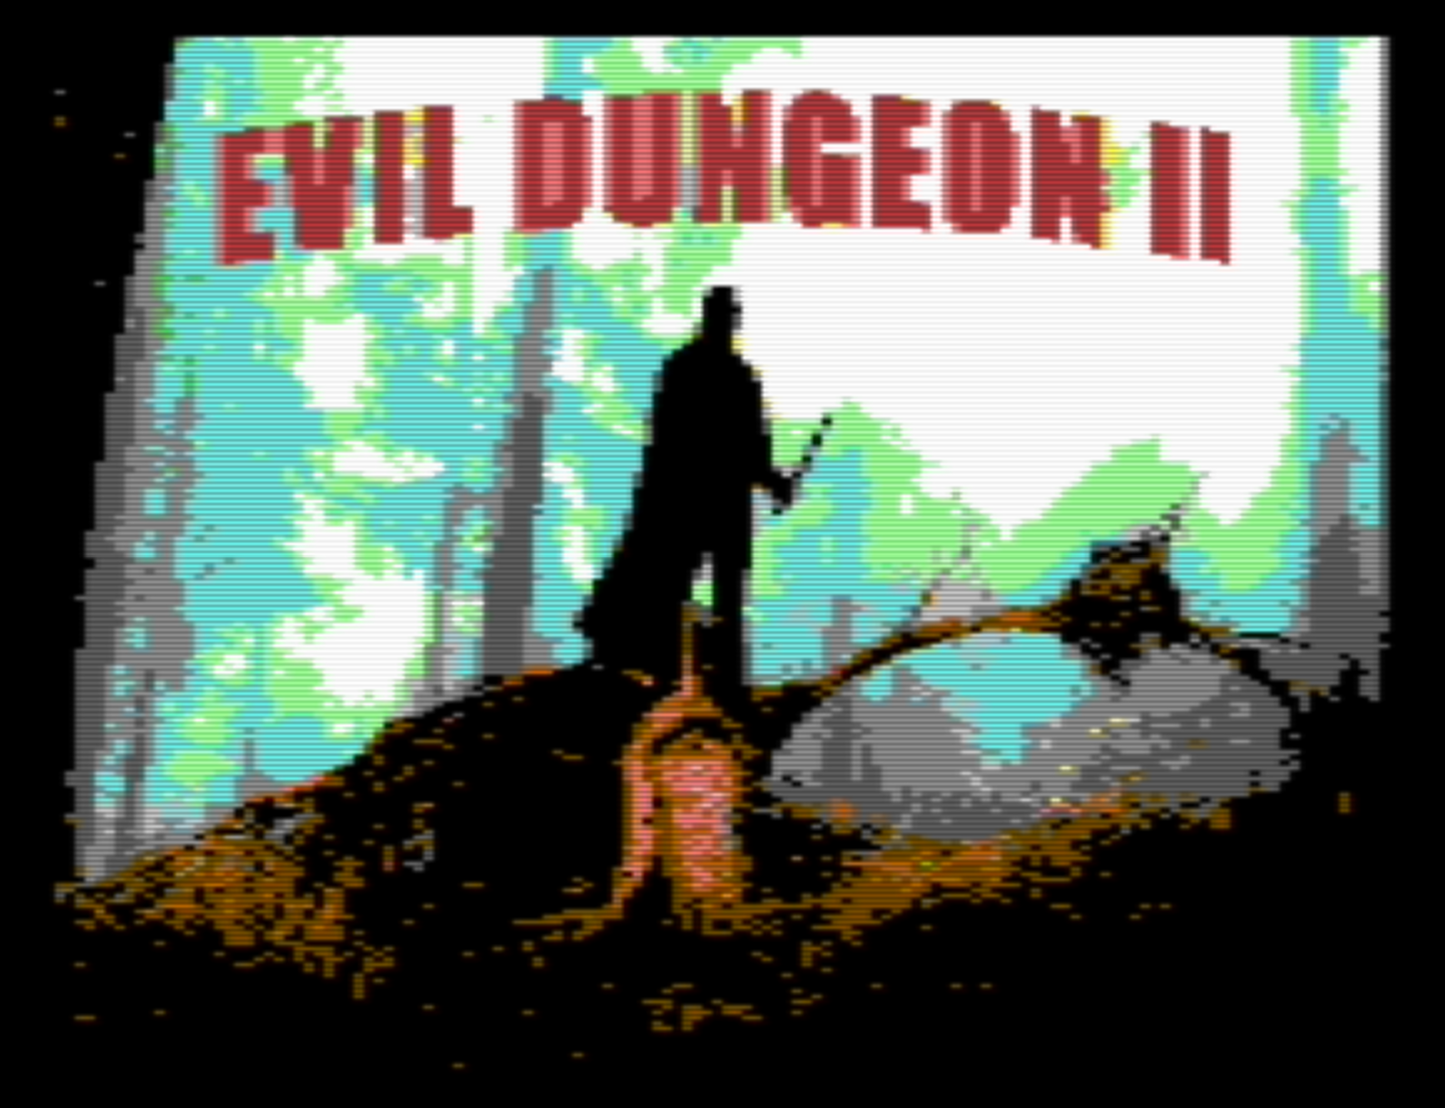 EVIL DUNGEON II (C64) - Collectors Edition